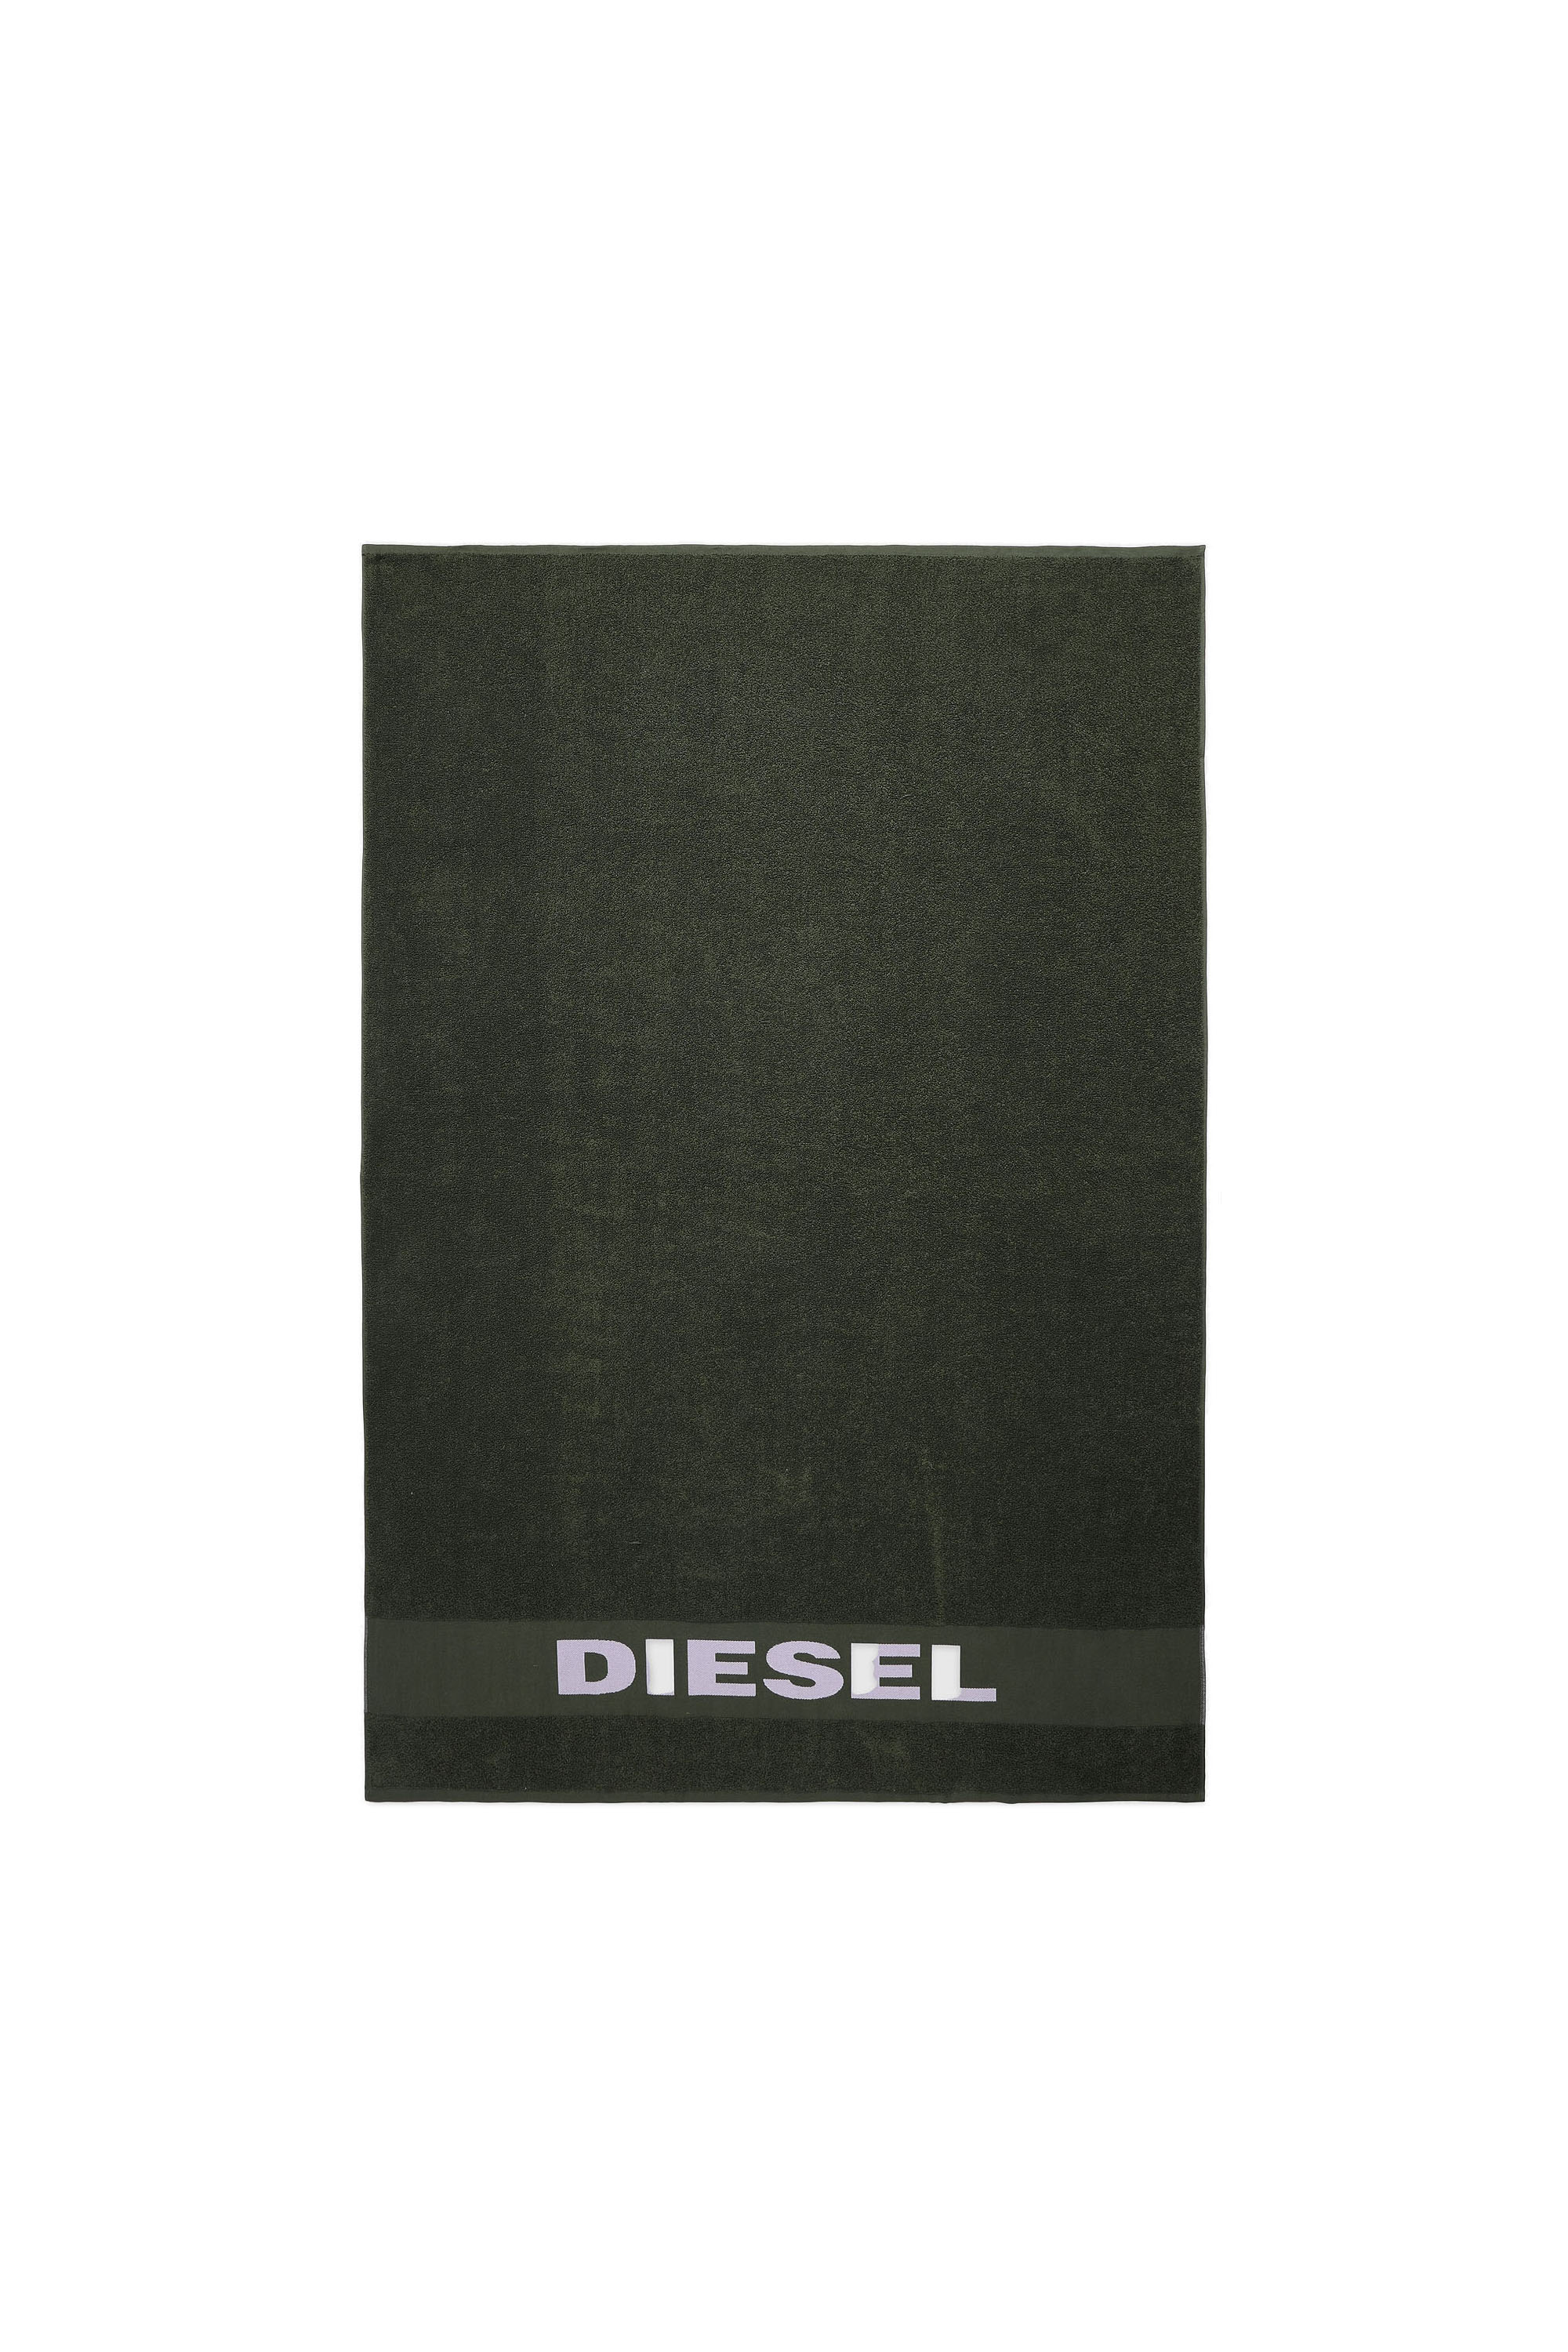 Diesel - TELO SPORT LOGO   10, Green - Image 2